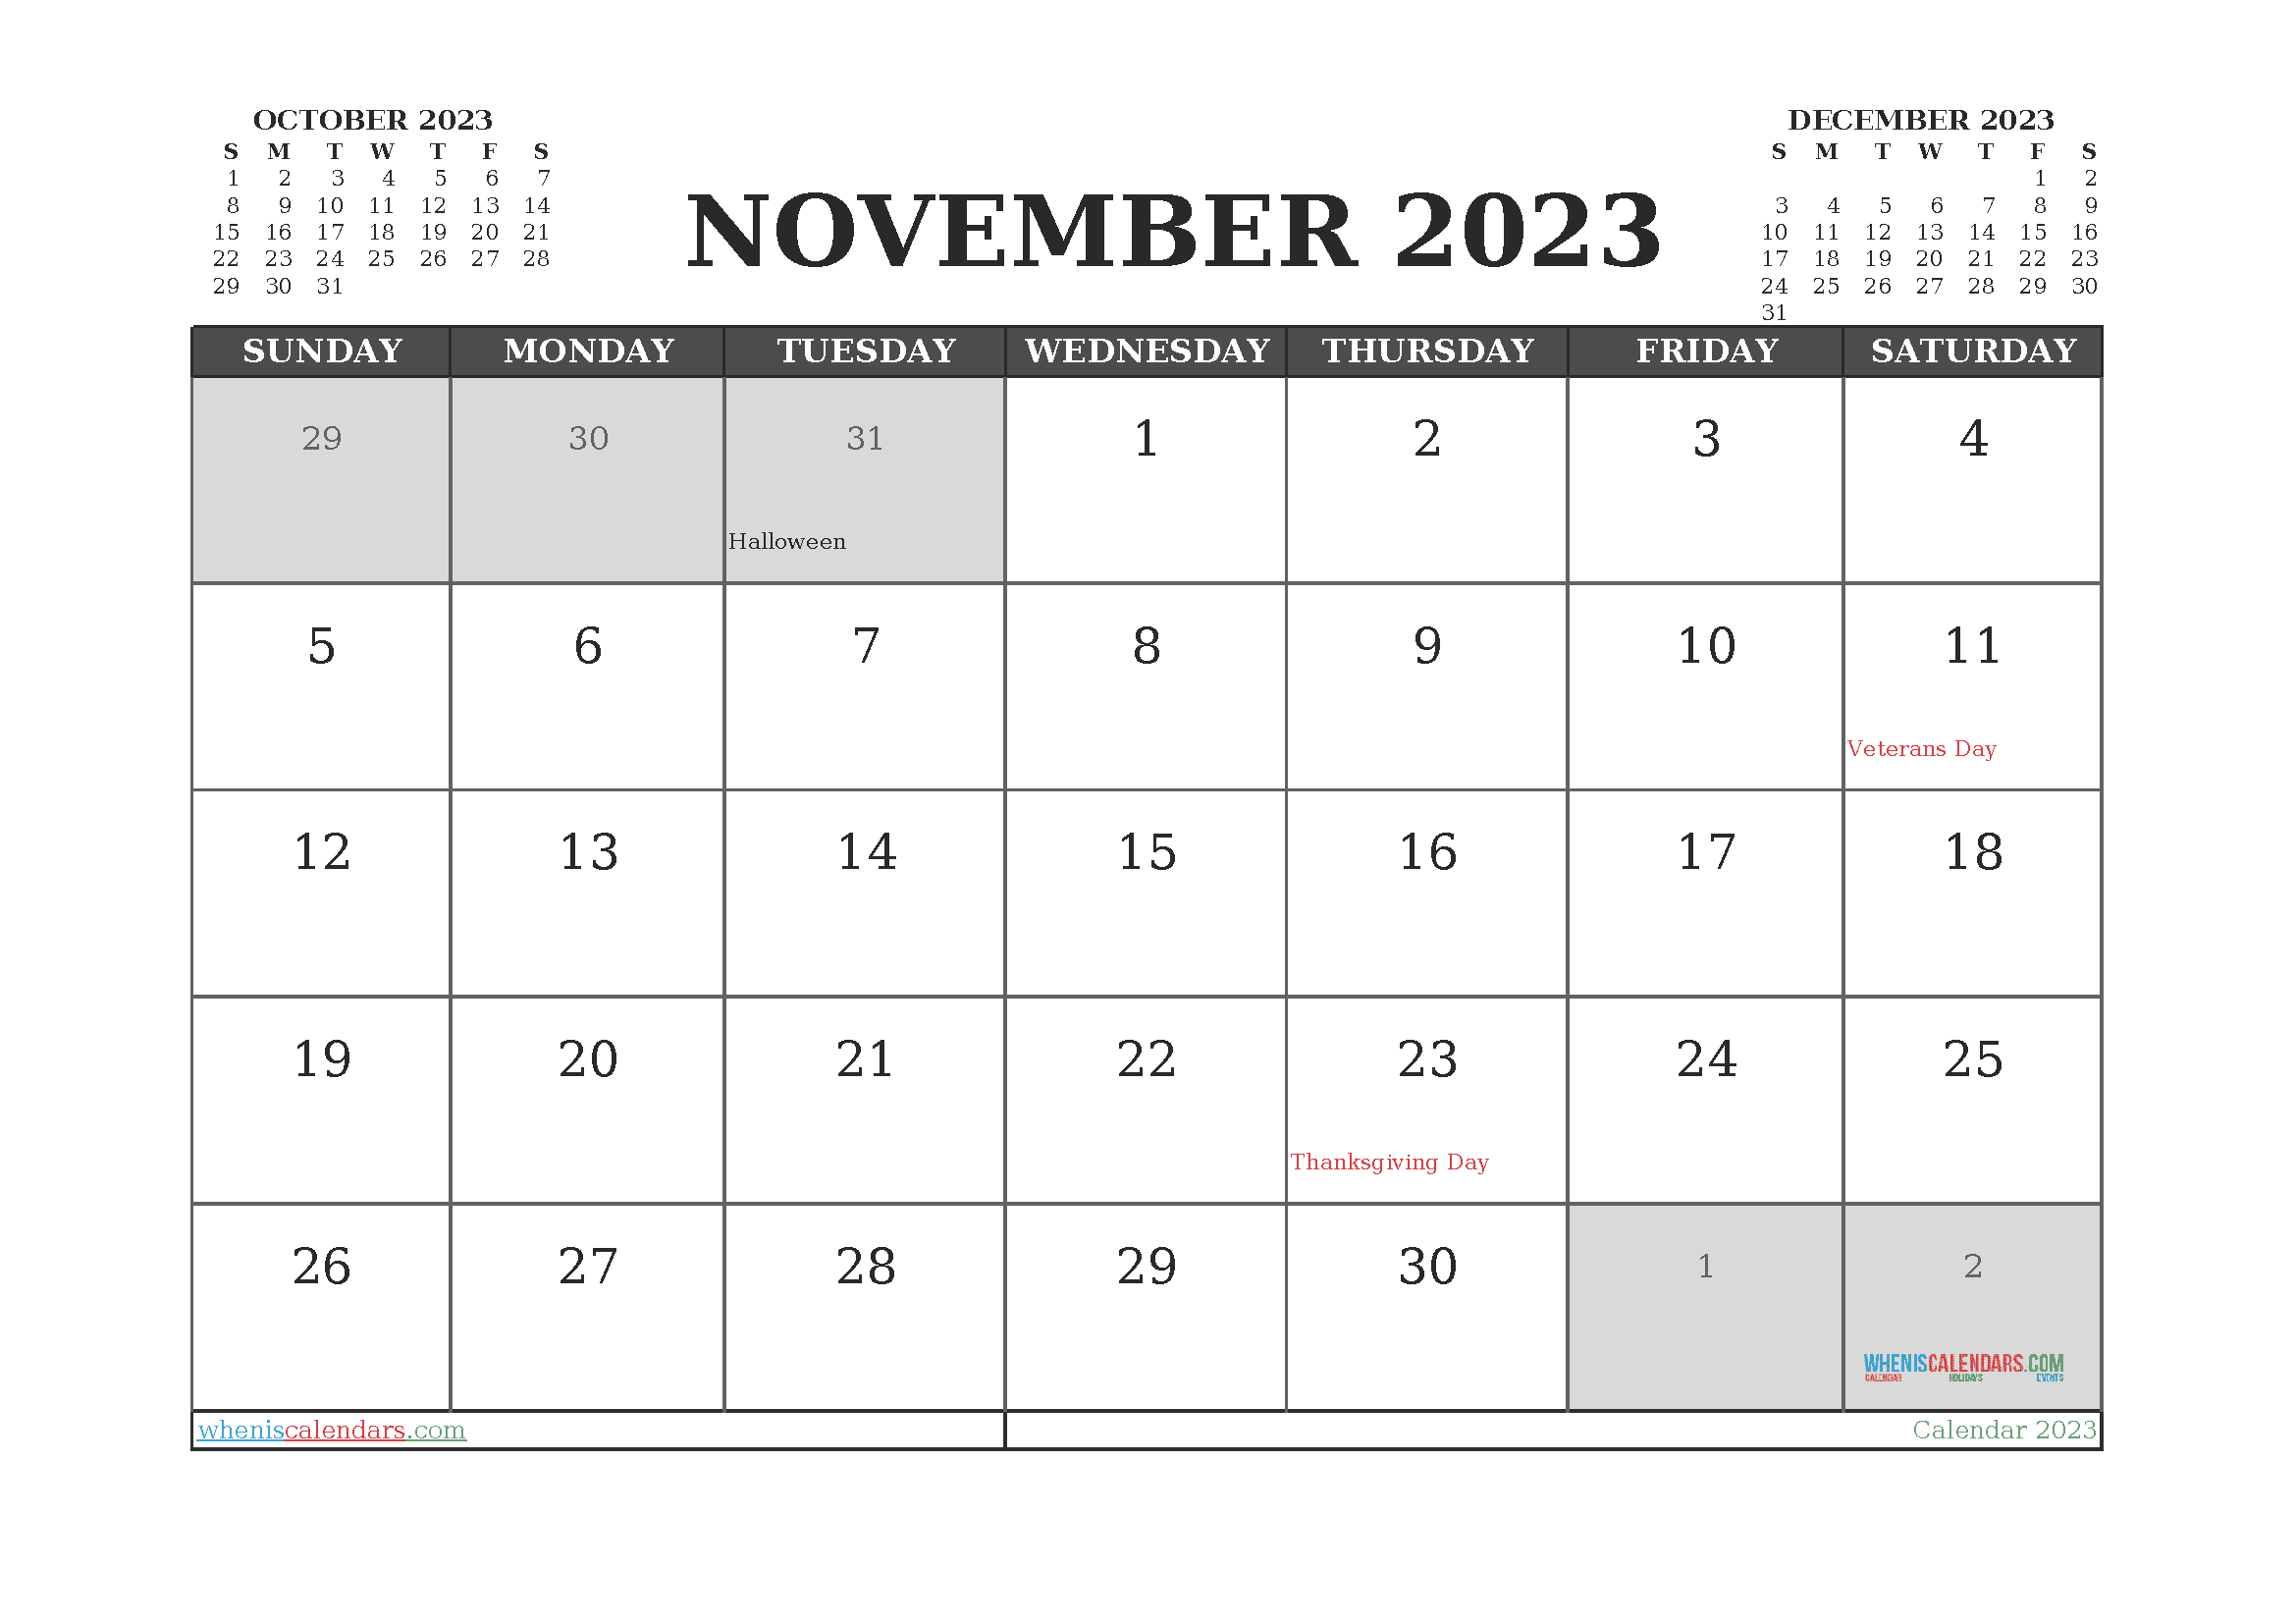 Free Printable Calendar November 2023 with Holidays PDF in Landscape